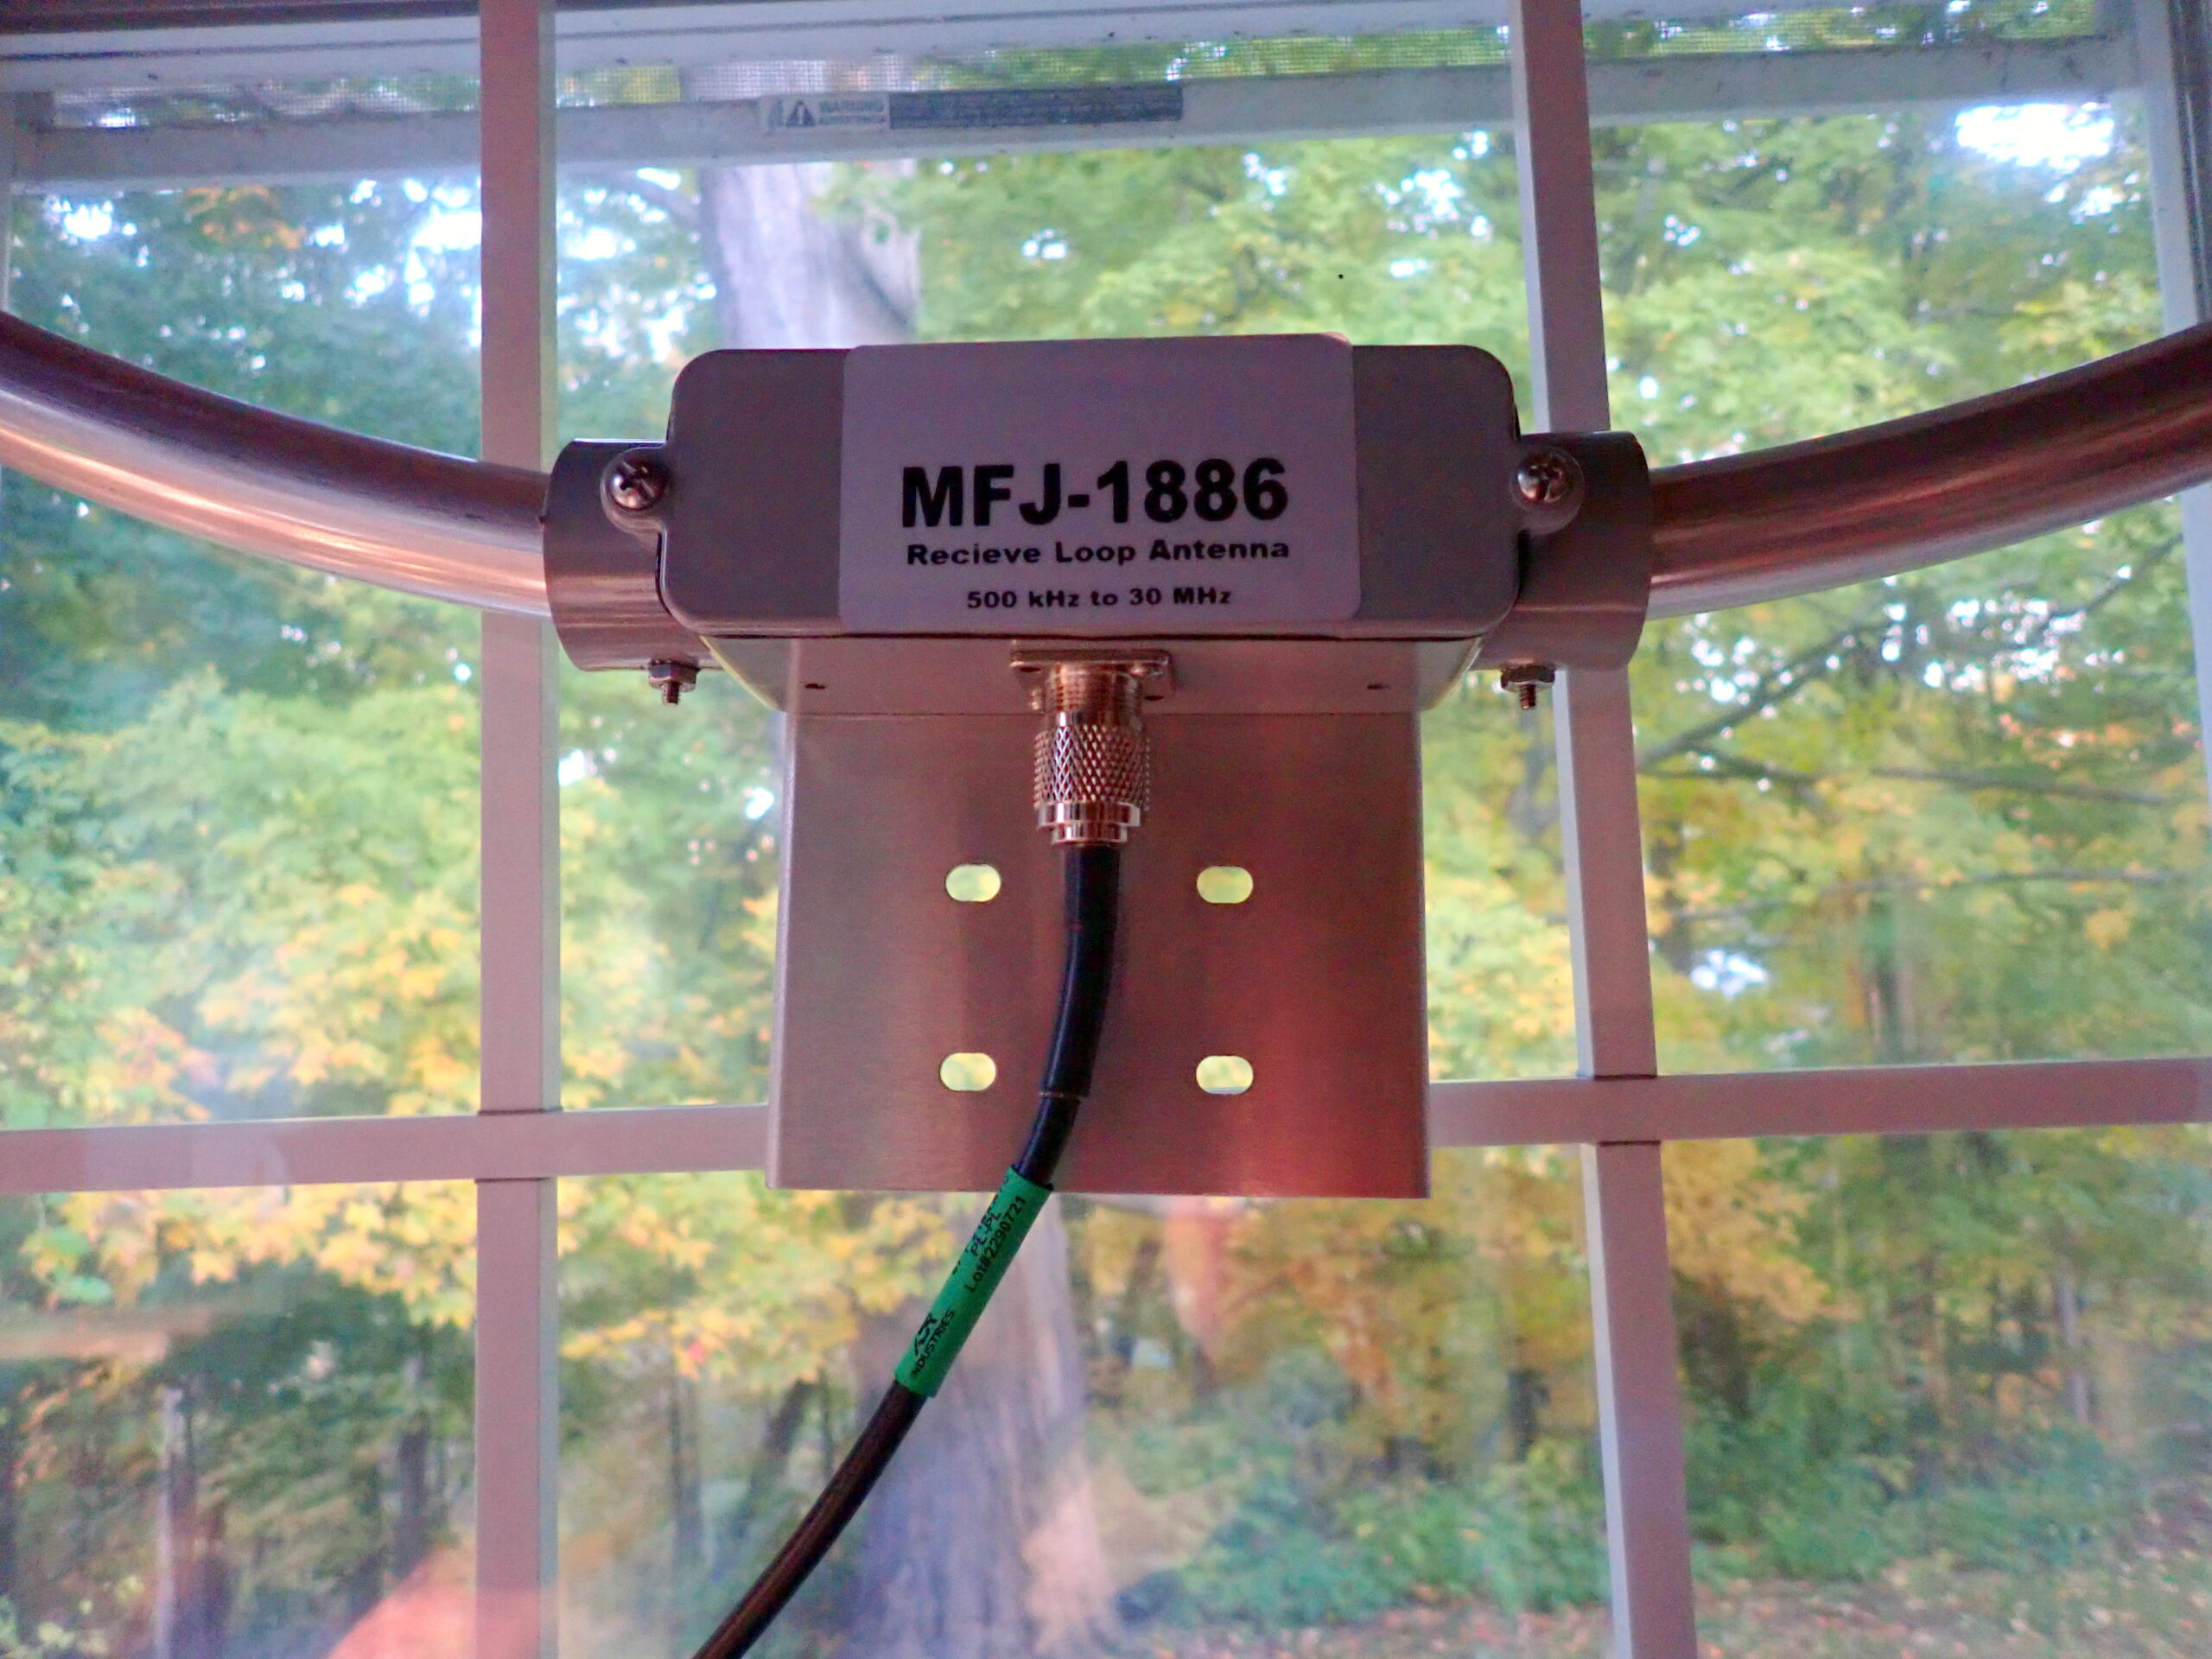 Testing the MFJ-1886 Receive Loop Antenna